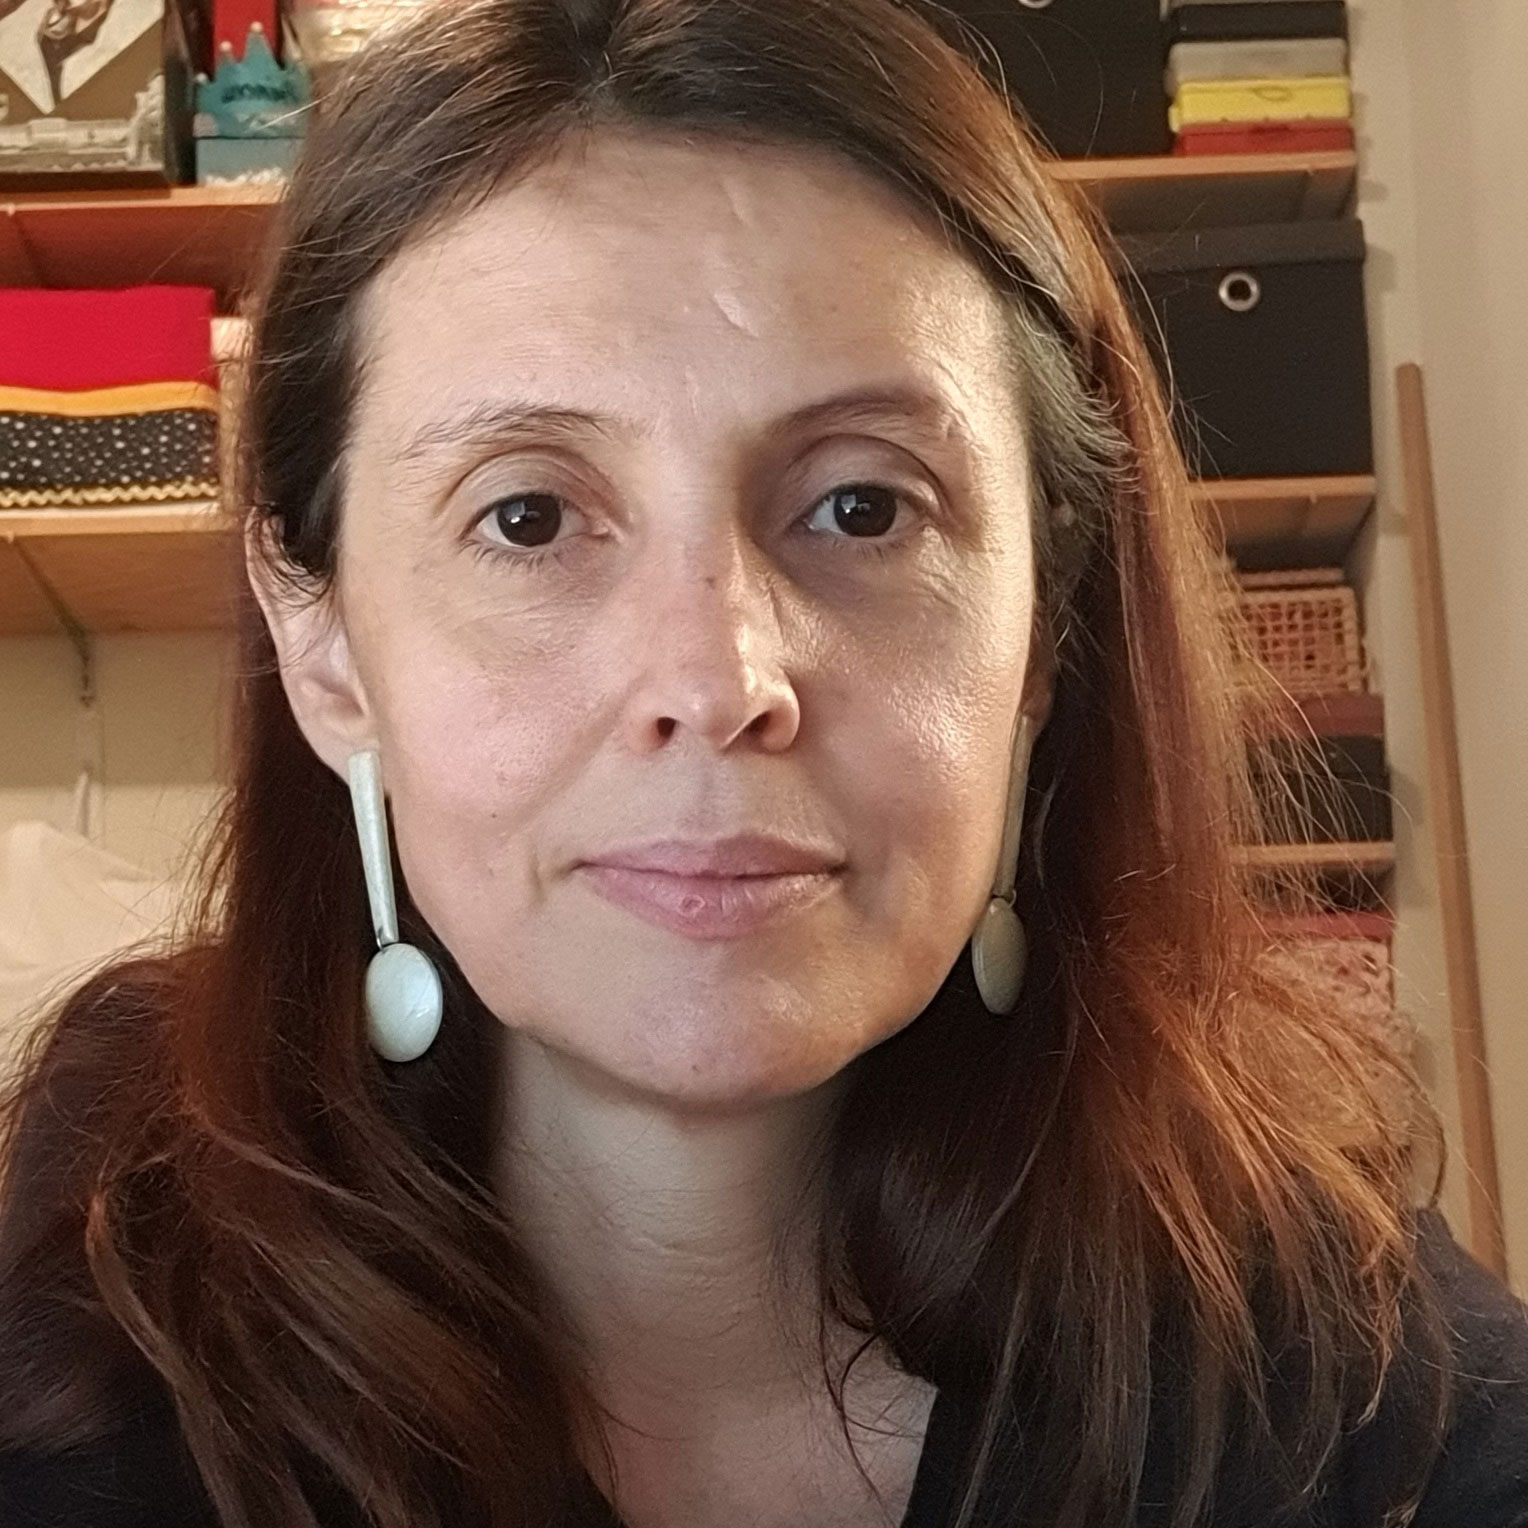 Profa. Dra. Anamaria Siriani de Oliveira